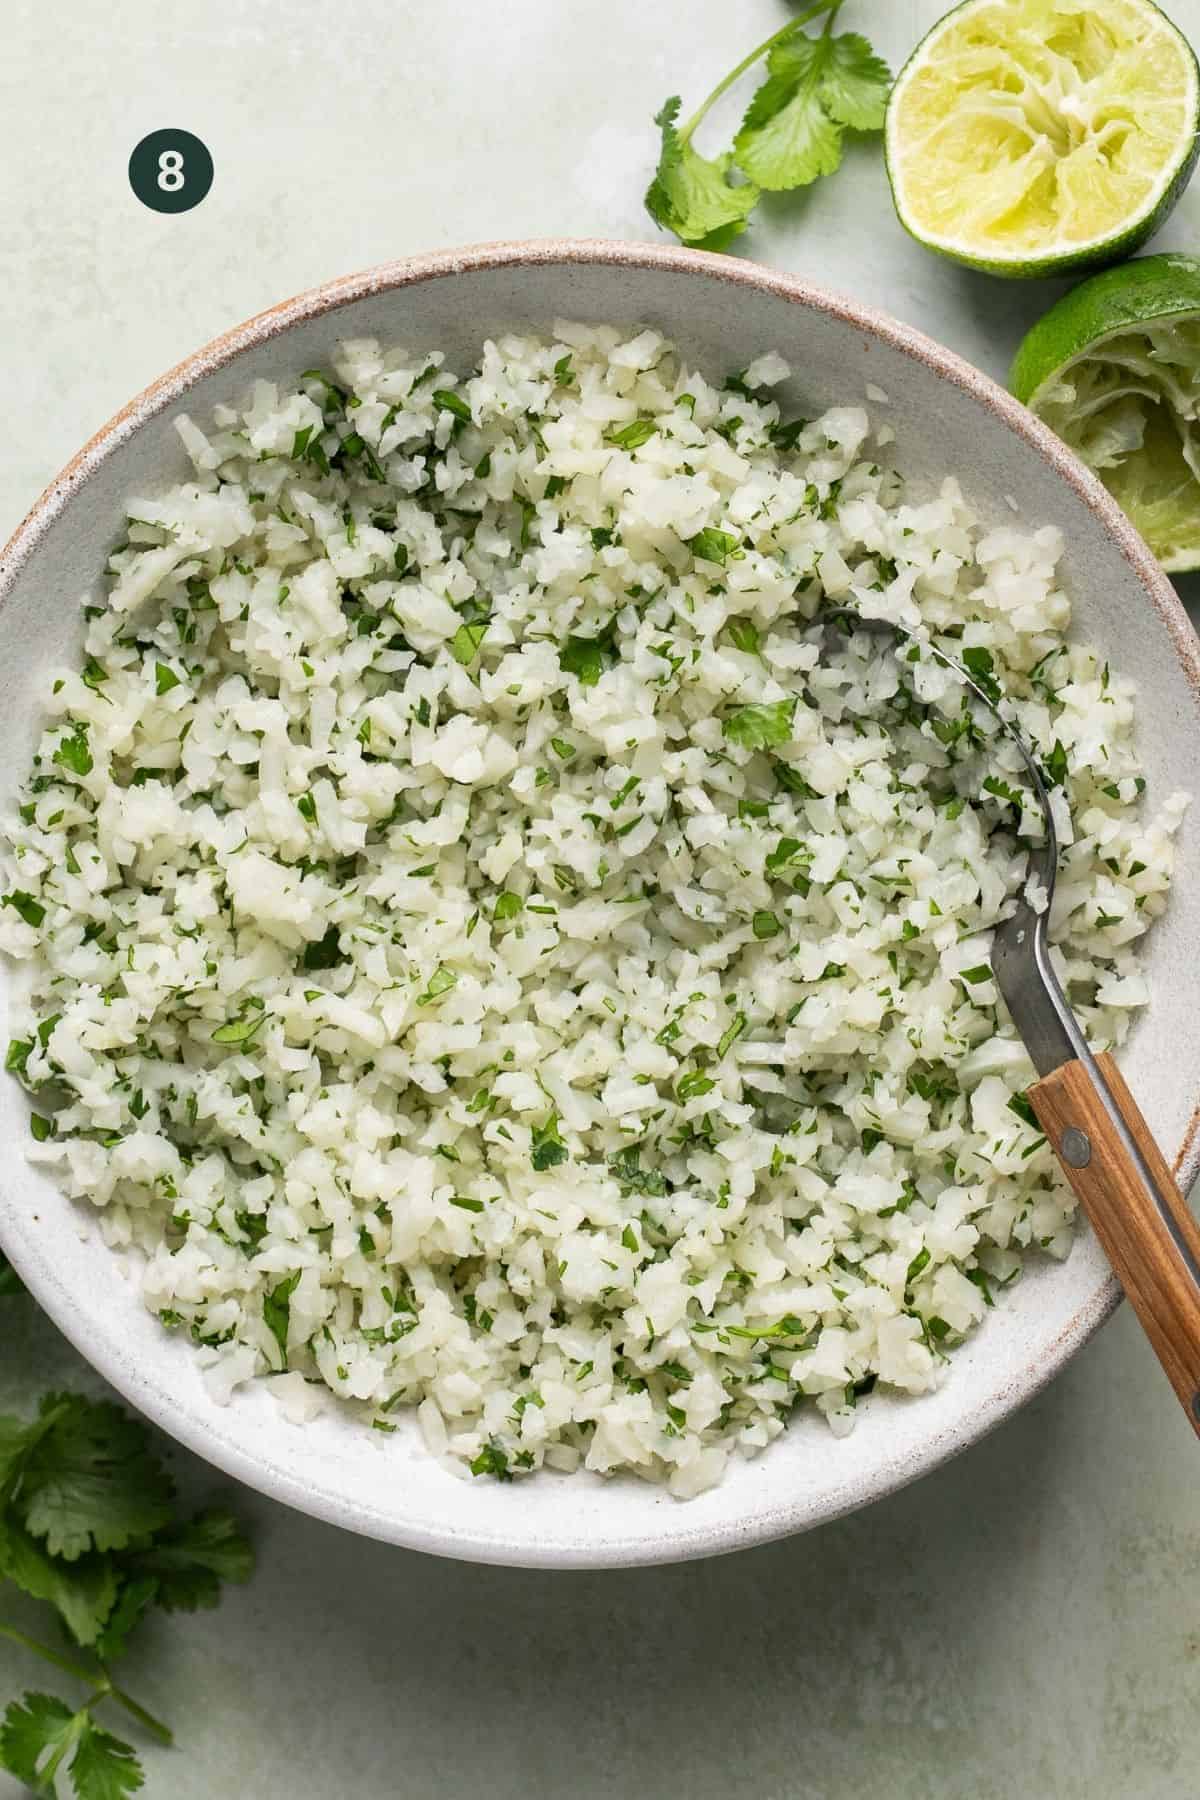 Combined cilantro lime cauli rice in a bowl.